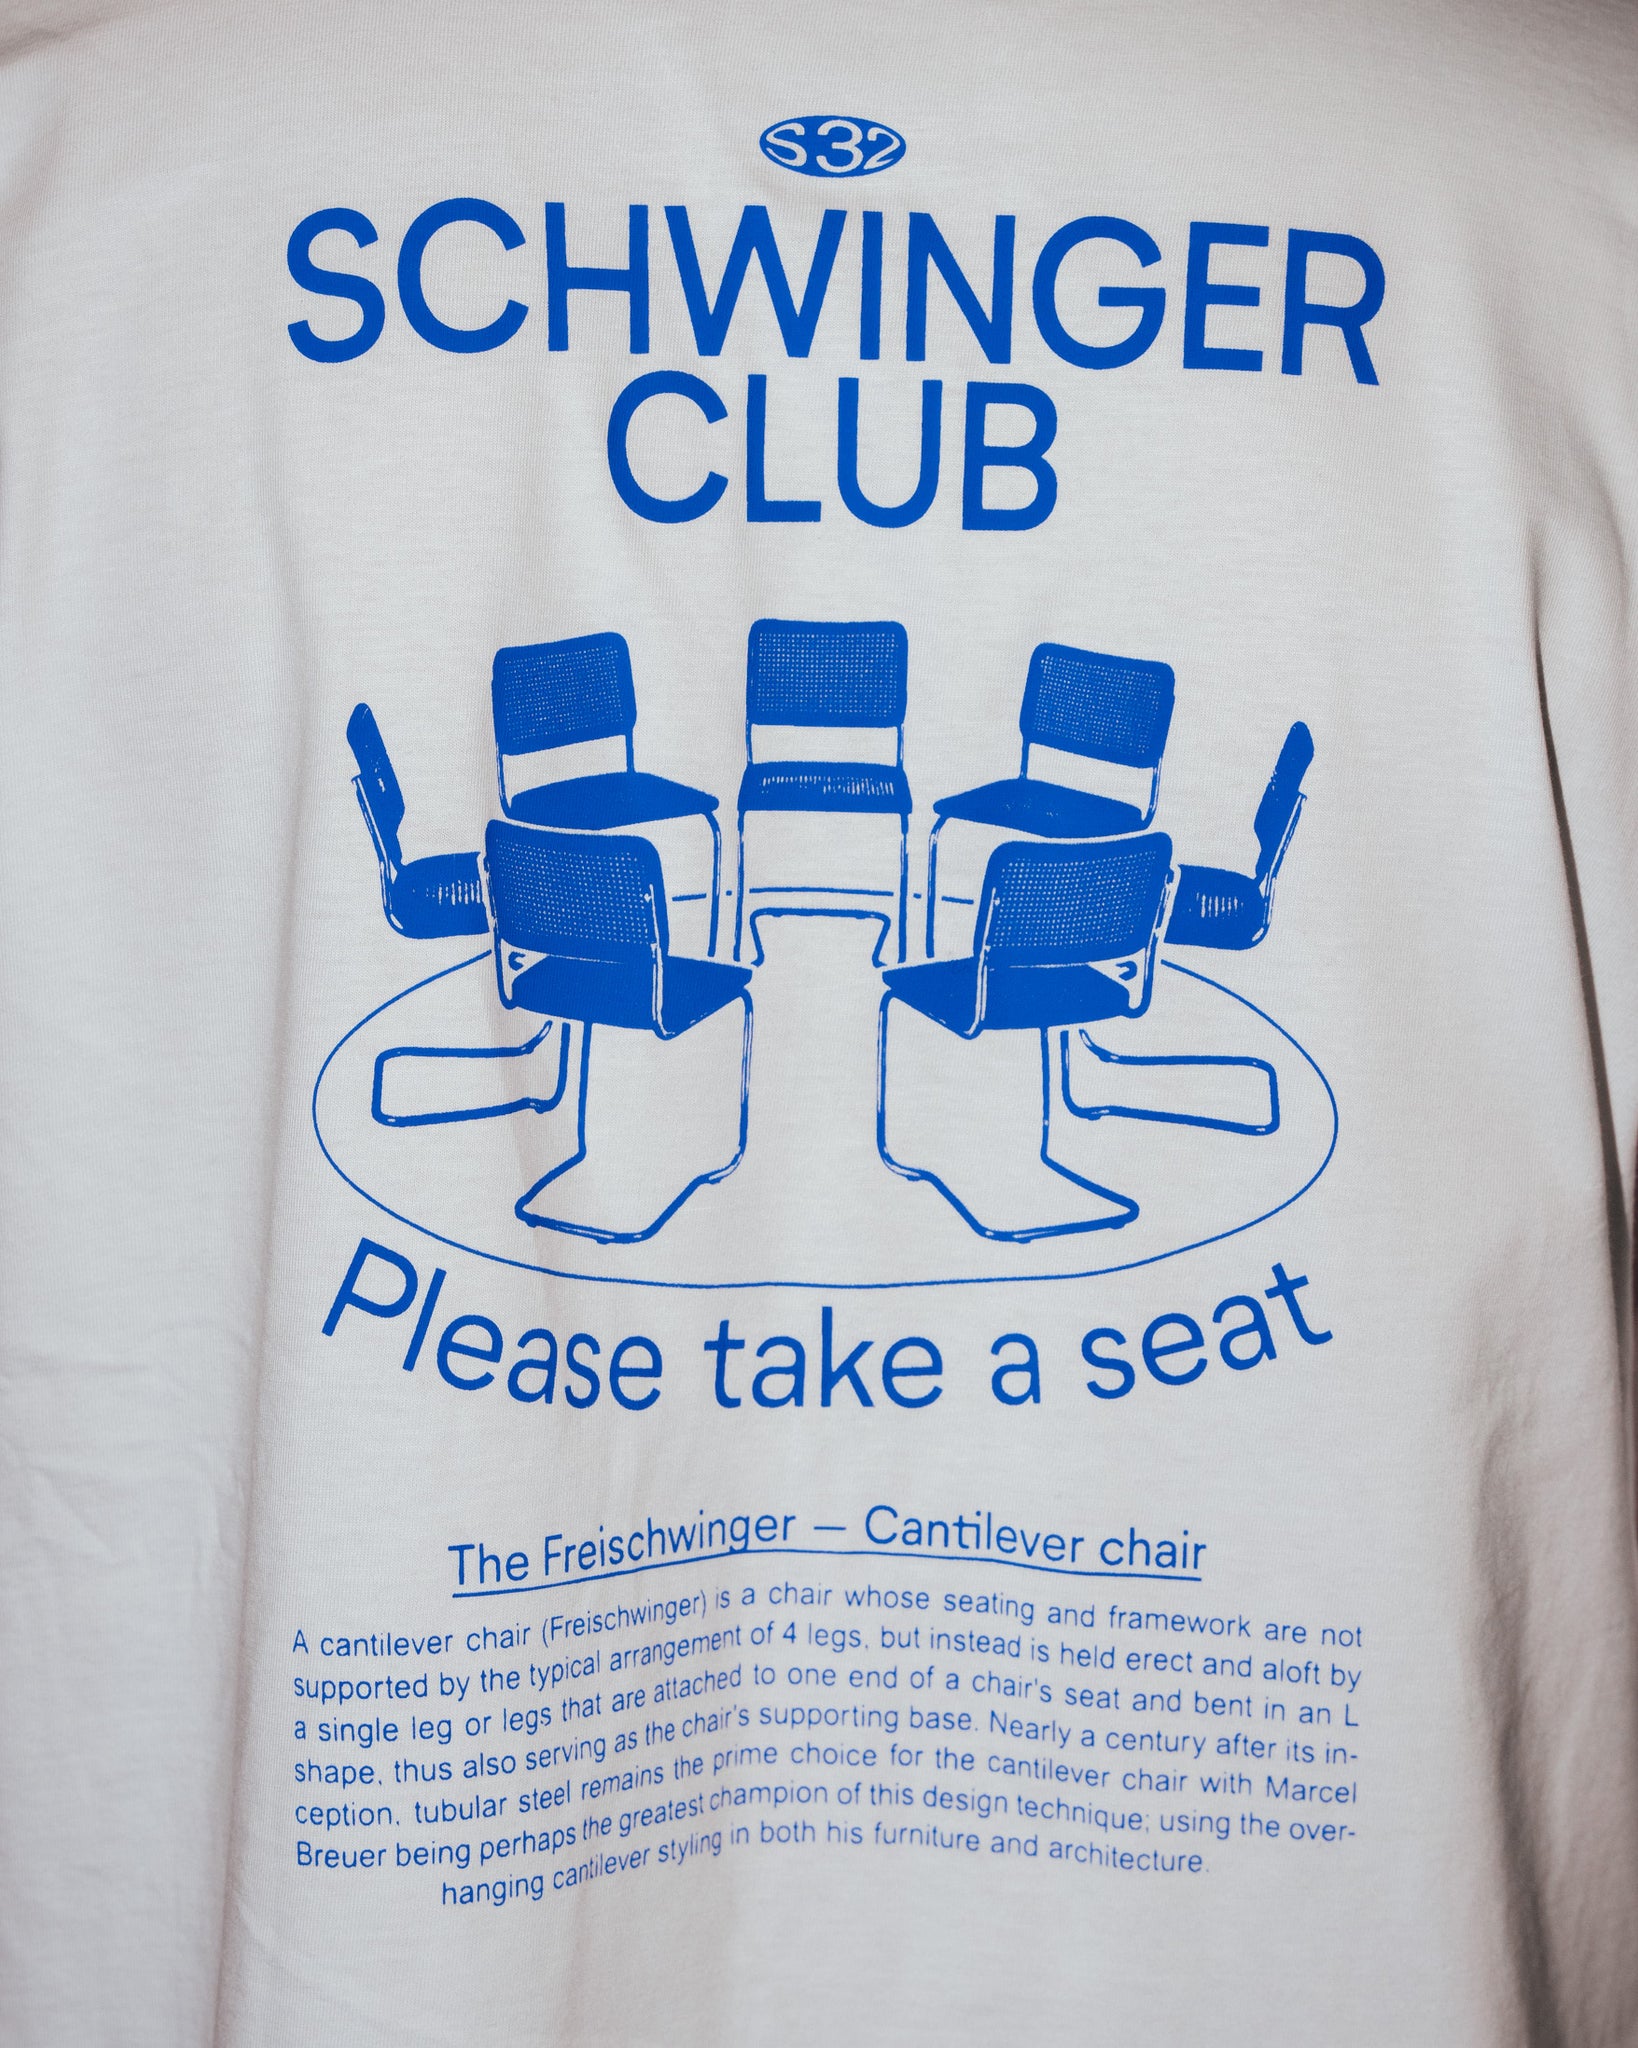 Schwinger Club Shirt by Moritz Moysig